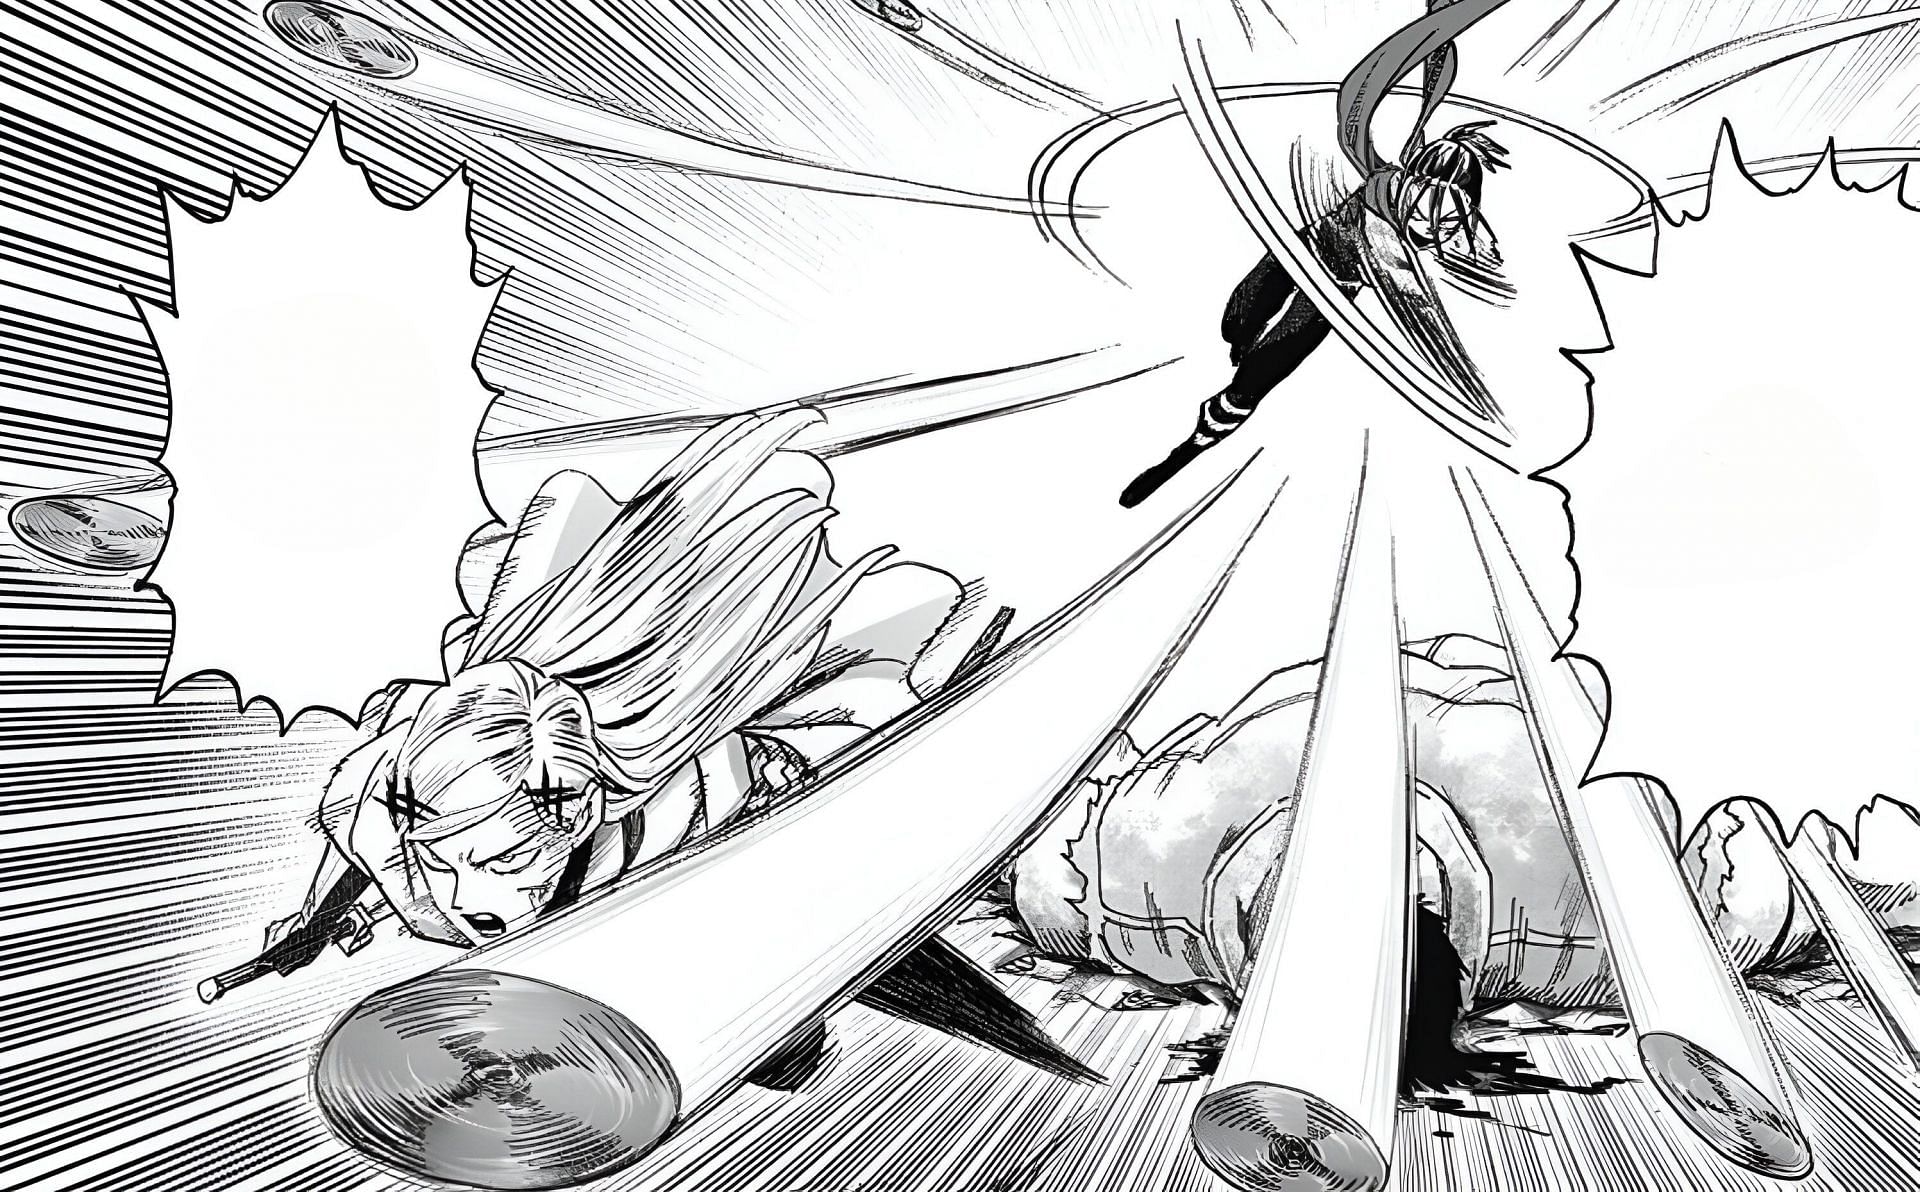 Flash and Sonic as seen in One Punch Man manga (Image via Shueisha)